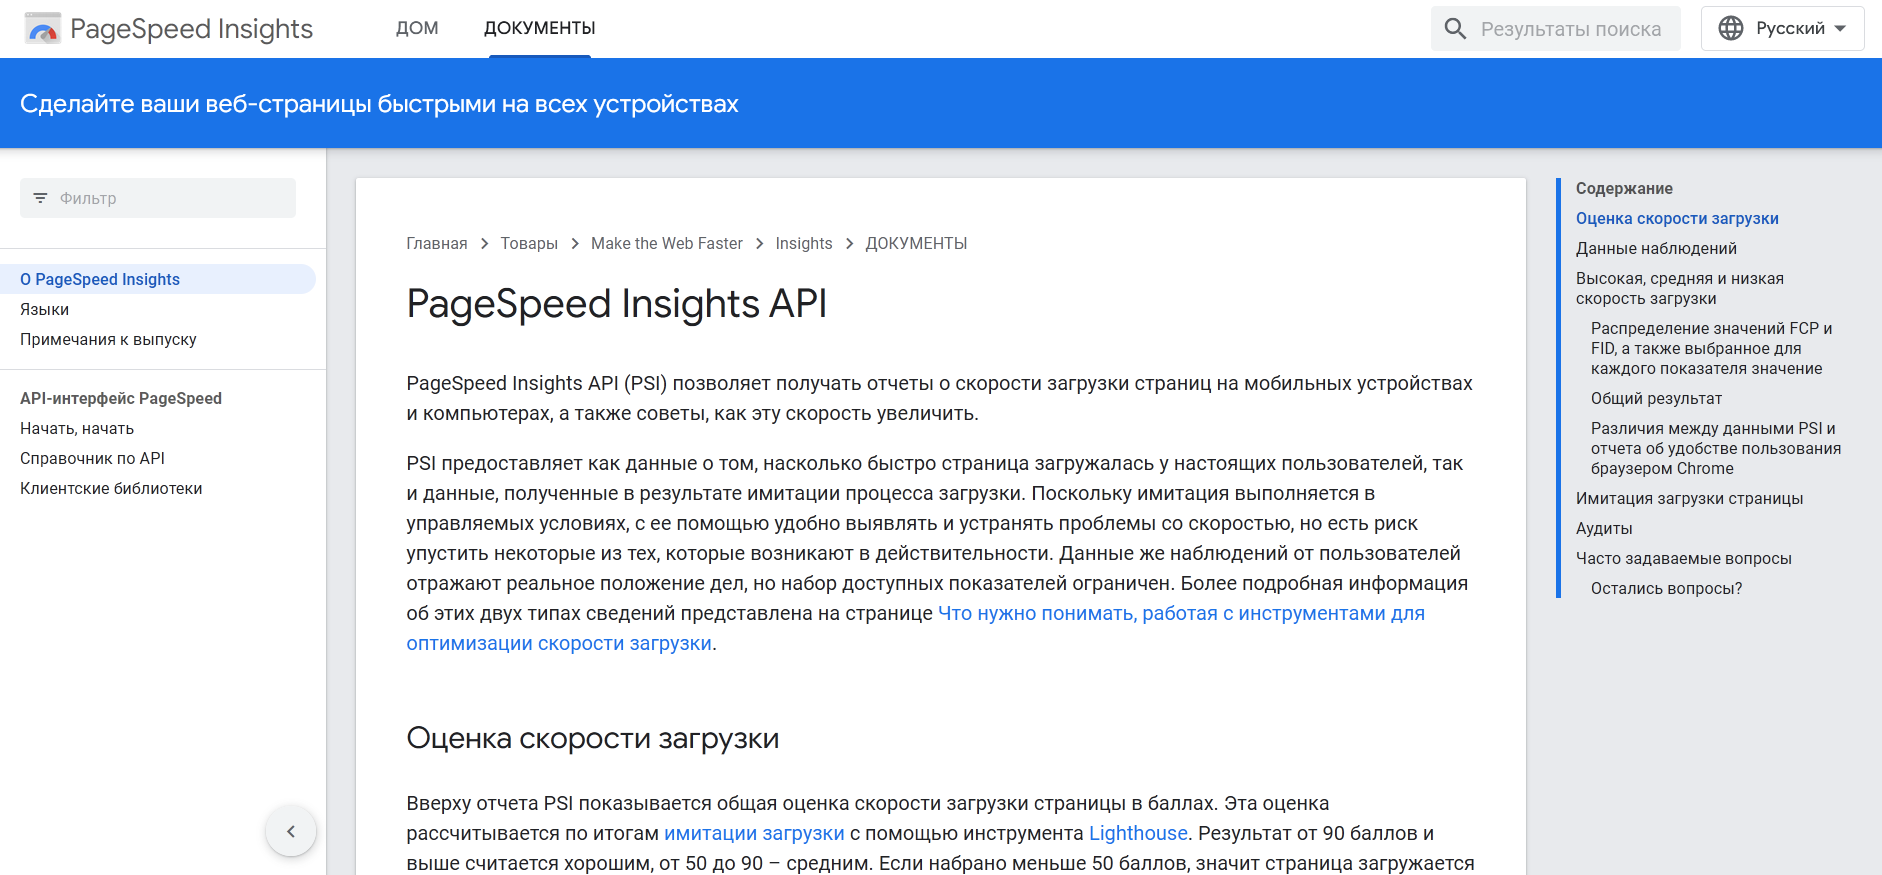 Вот как выглядит описание инструмента PageSpeed Insights